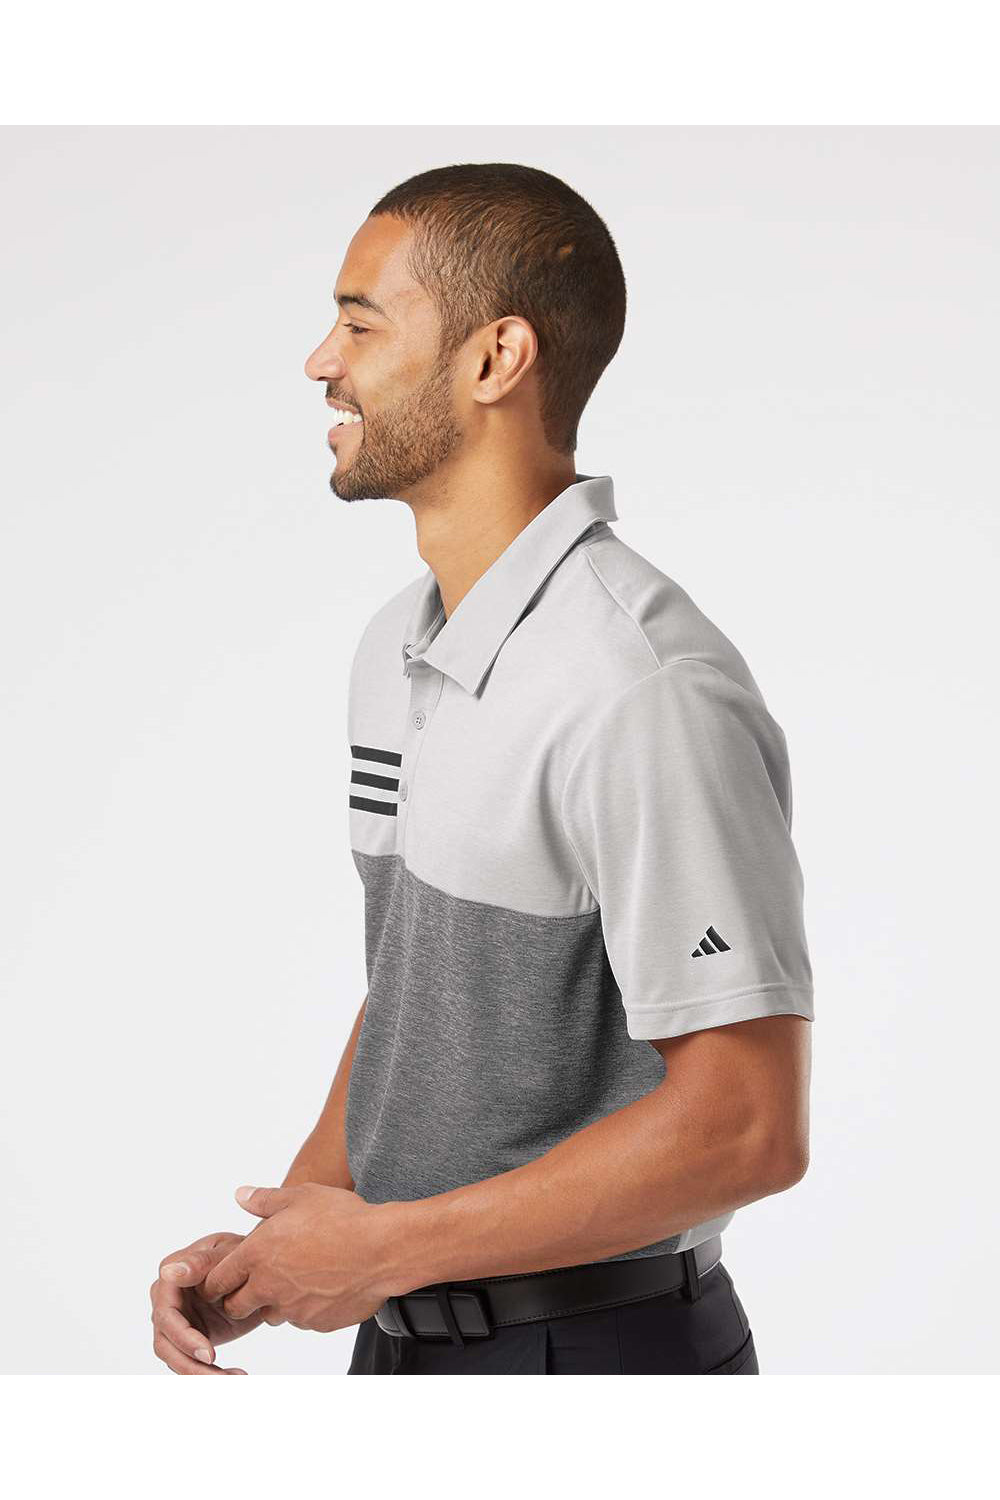 Adidas A508 Mens 3 Stripes Heathered Colorblocked Short Sleeve Polo Shirt Heather Grey/Heather Black Model Side